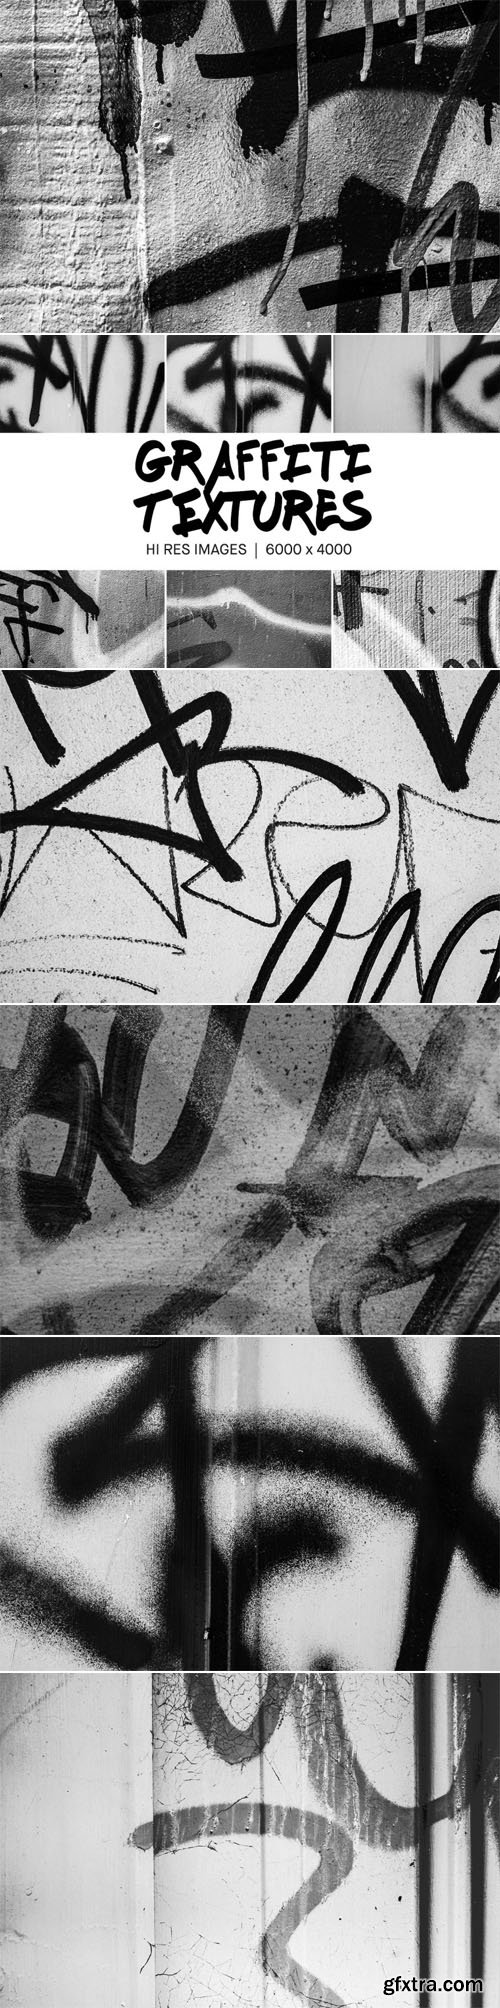 5 Graffiti Textures